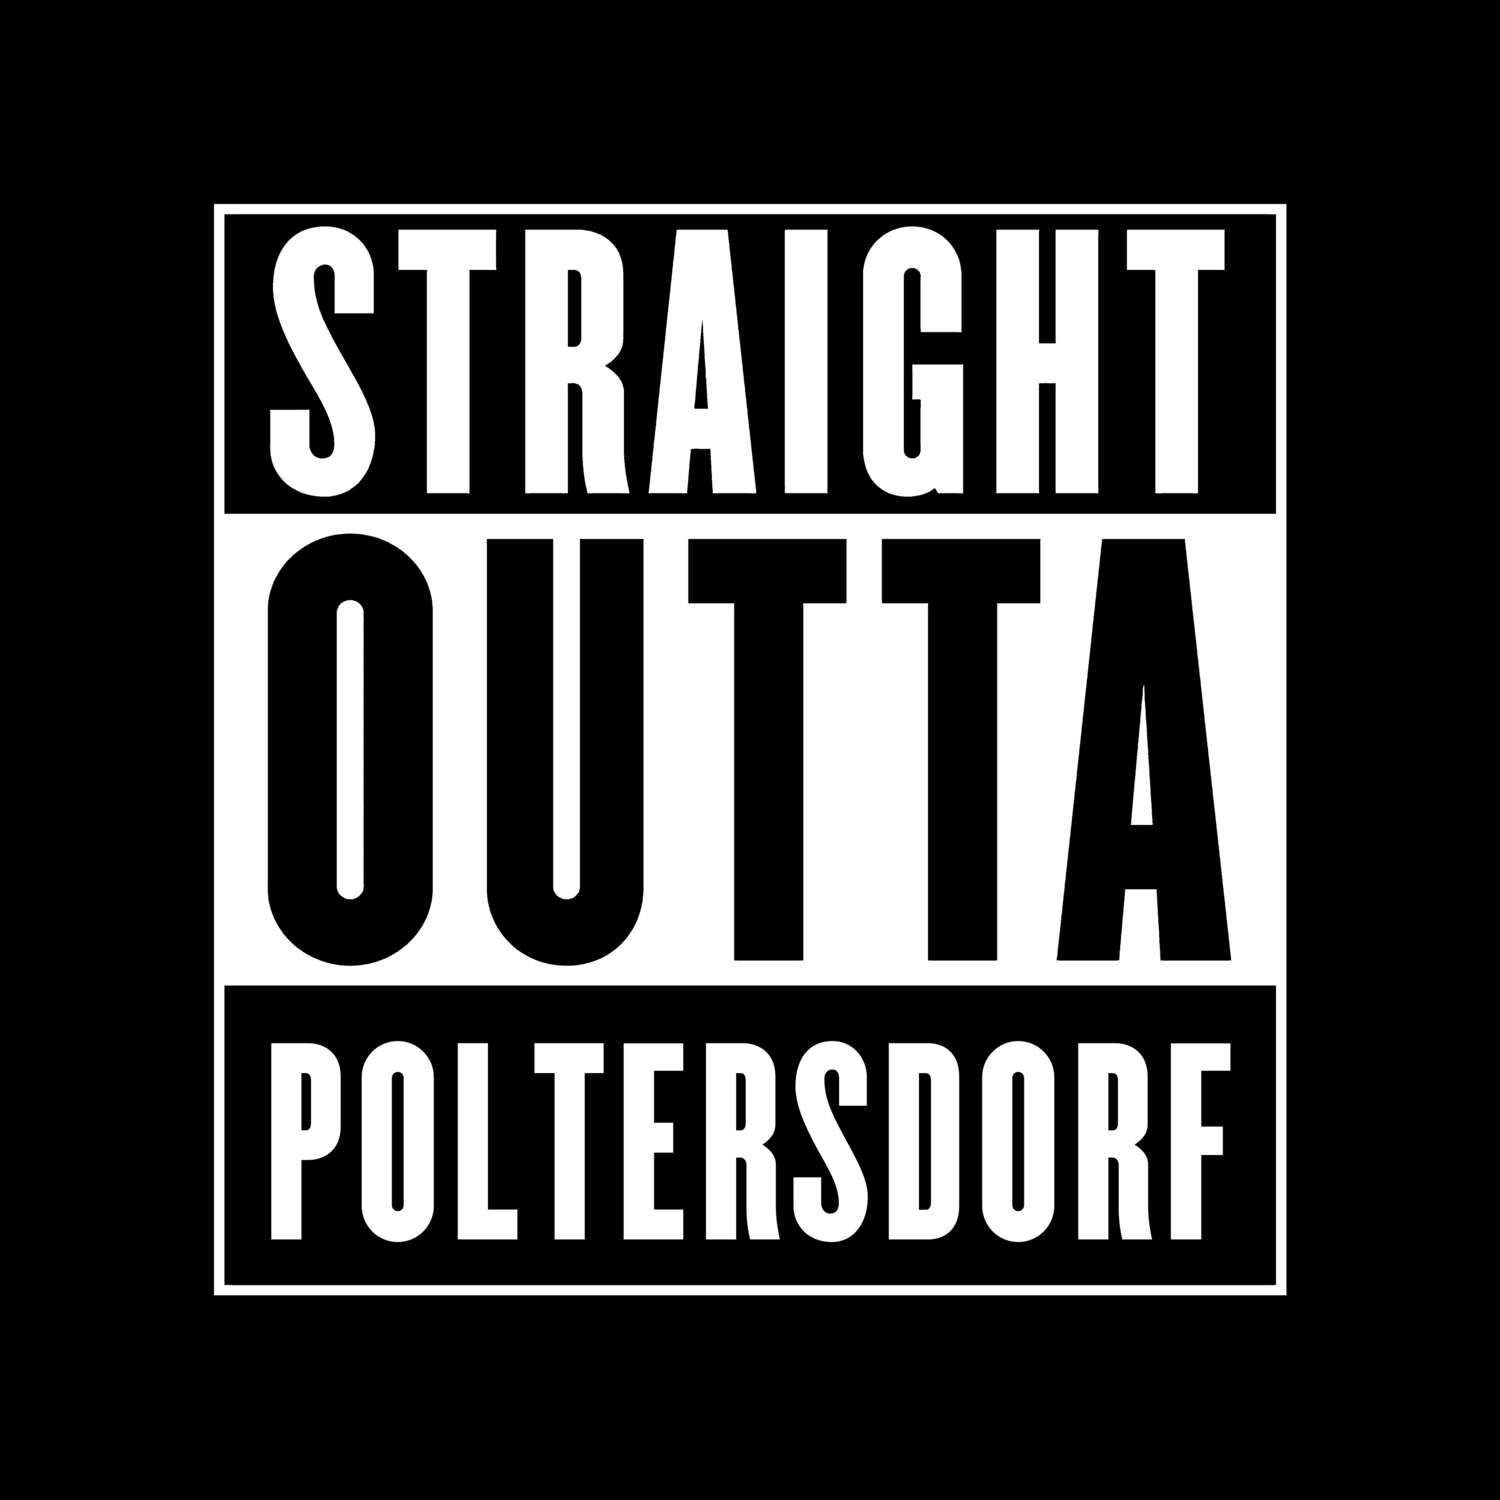 Poltersdorf T-Shirt »Straight Outta«